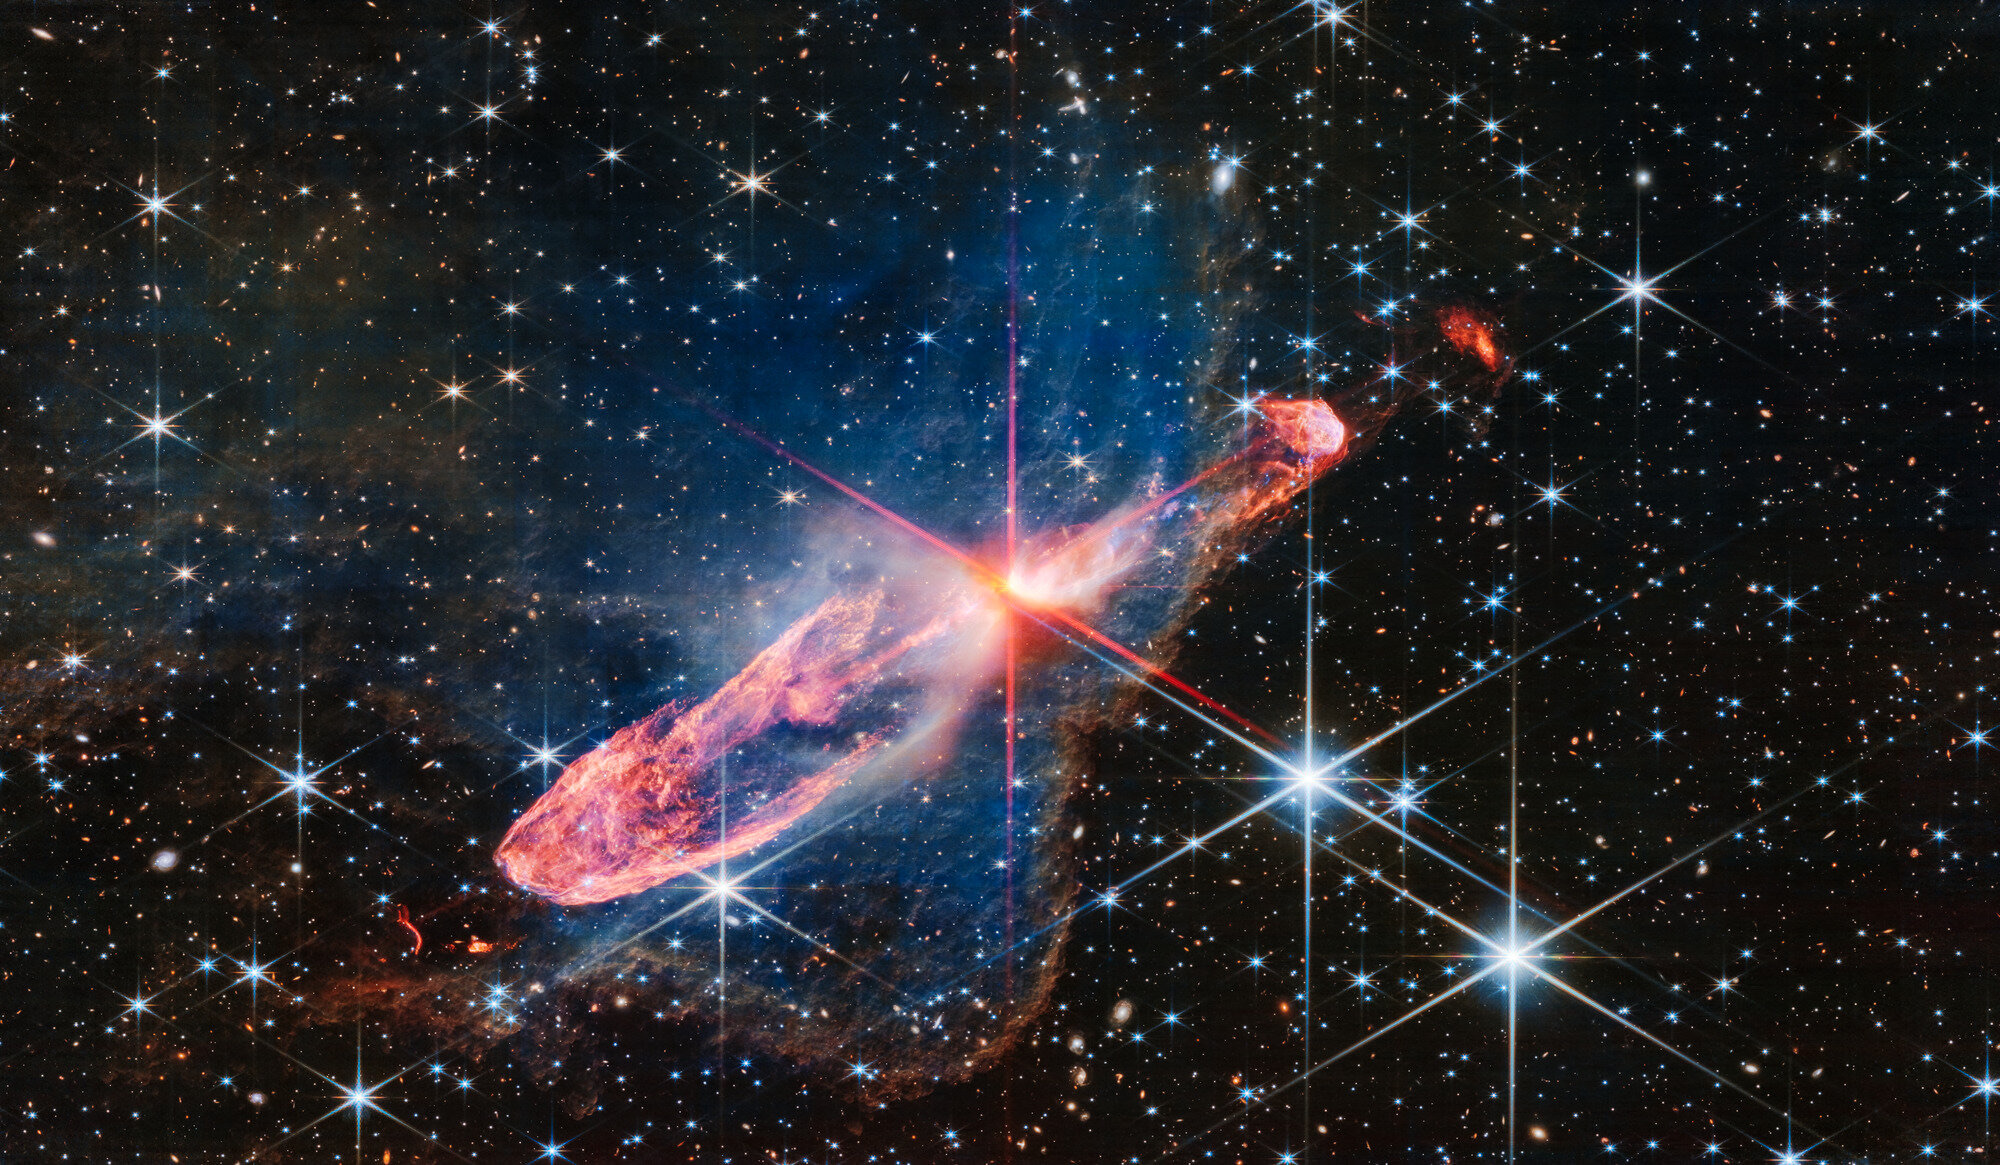 Webb's image of Herbig-Haro 46/47. Credit: NASA, ESA, CSA. Image Processing: Joseph DePasquale (STScI)